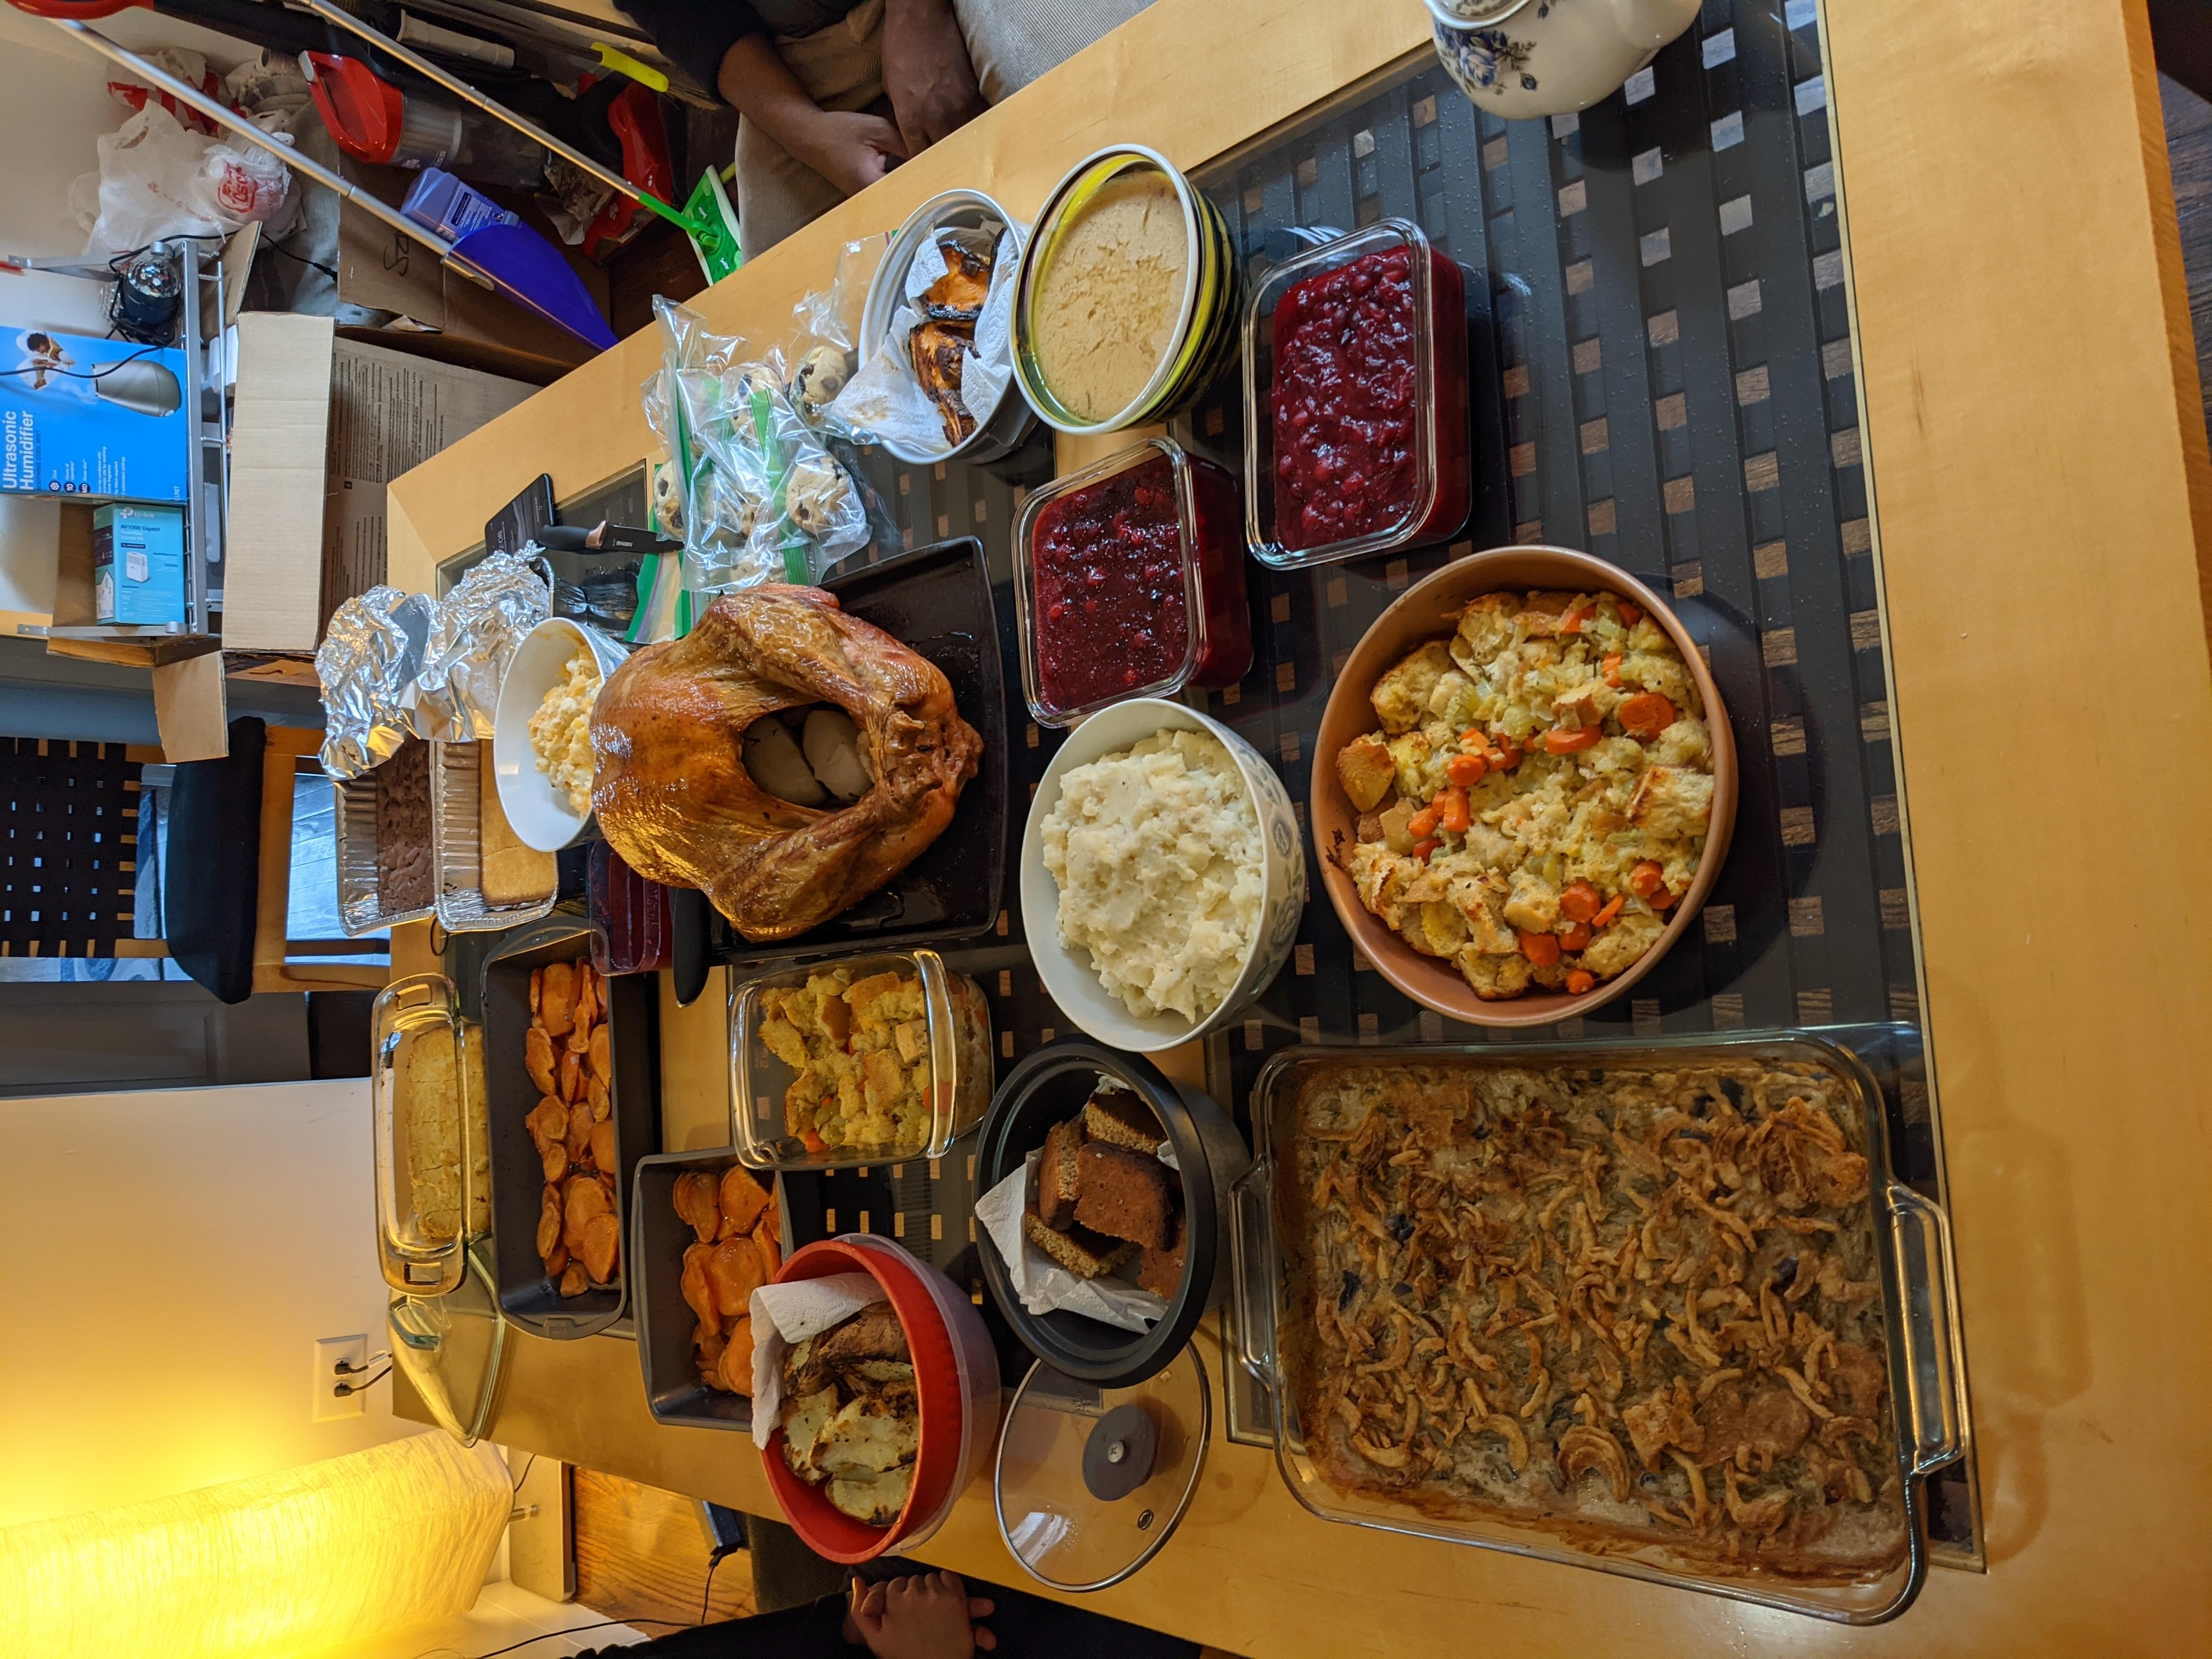 A full Thanksgiving spread!